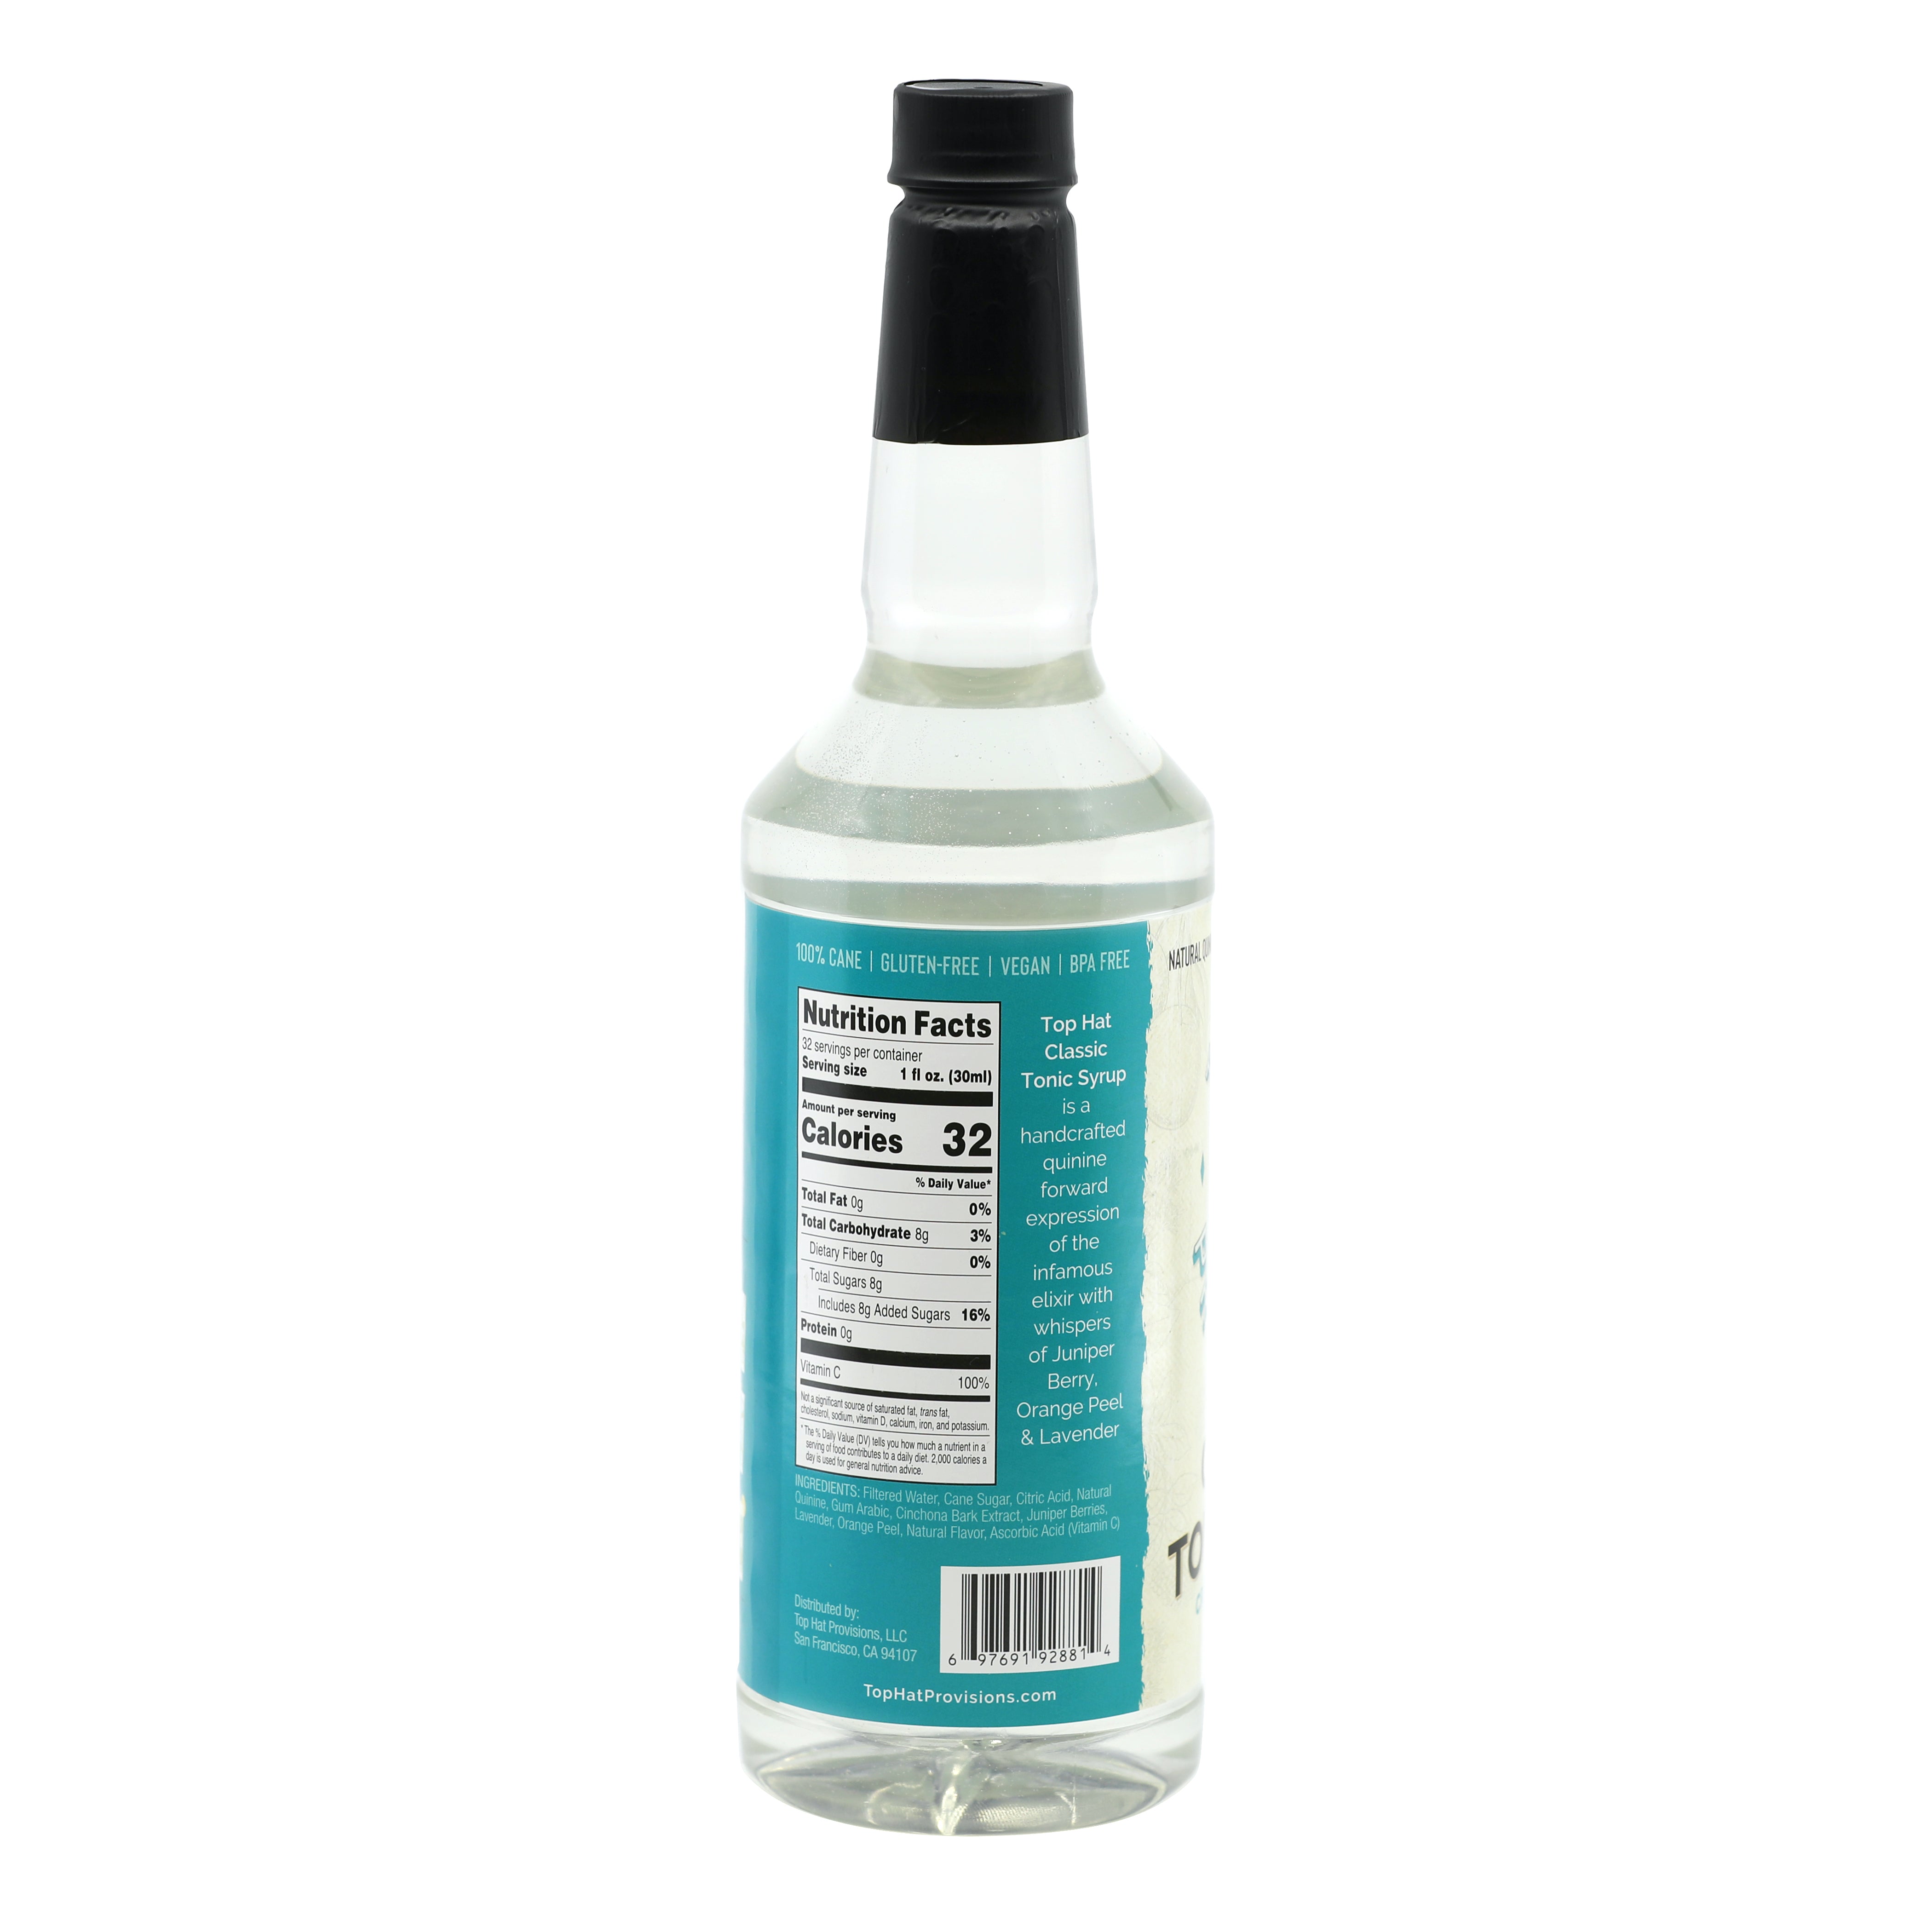 Top Hat Classic Tonic Syrup & 5x Premium Quinine Concentrate - 32oz Bottle